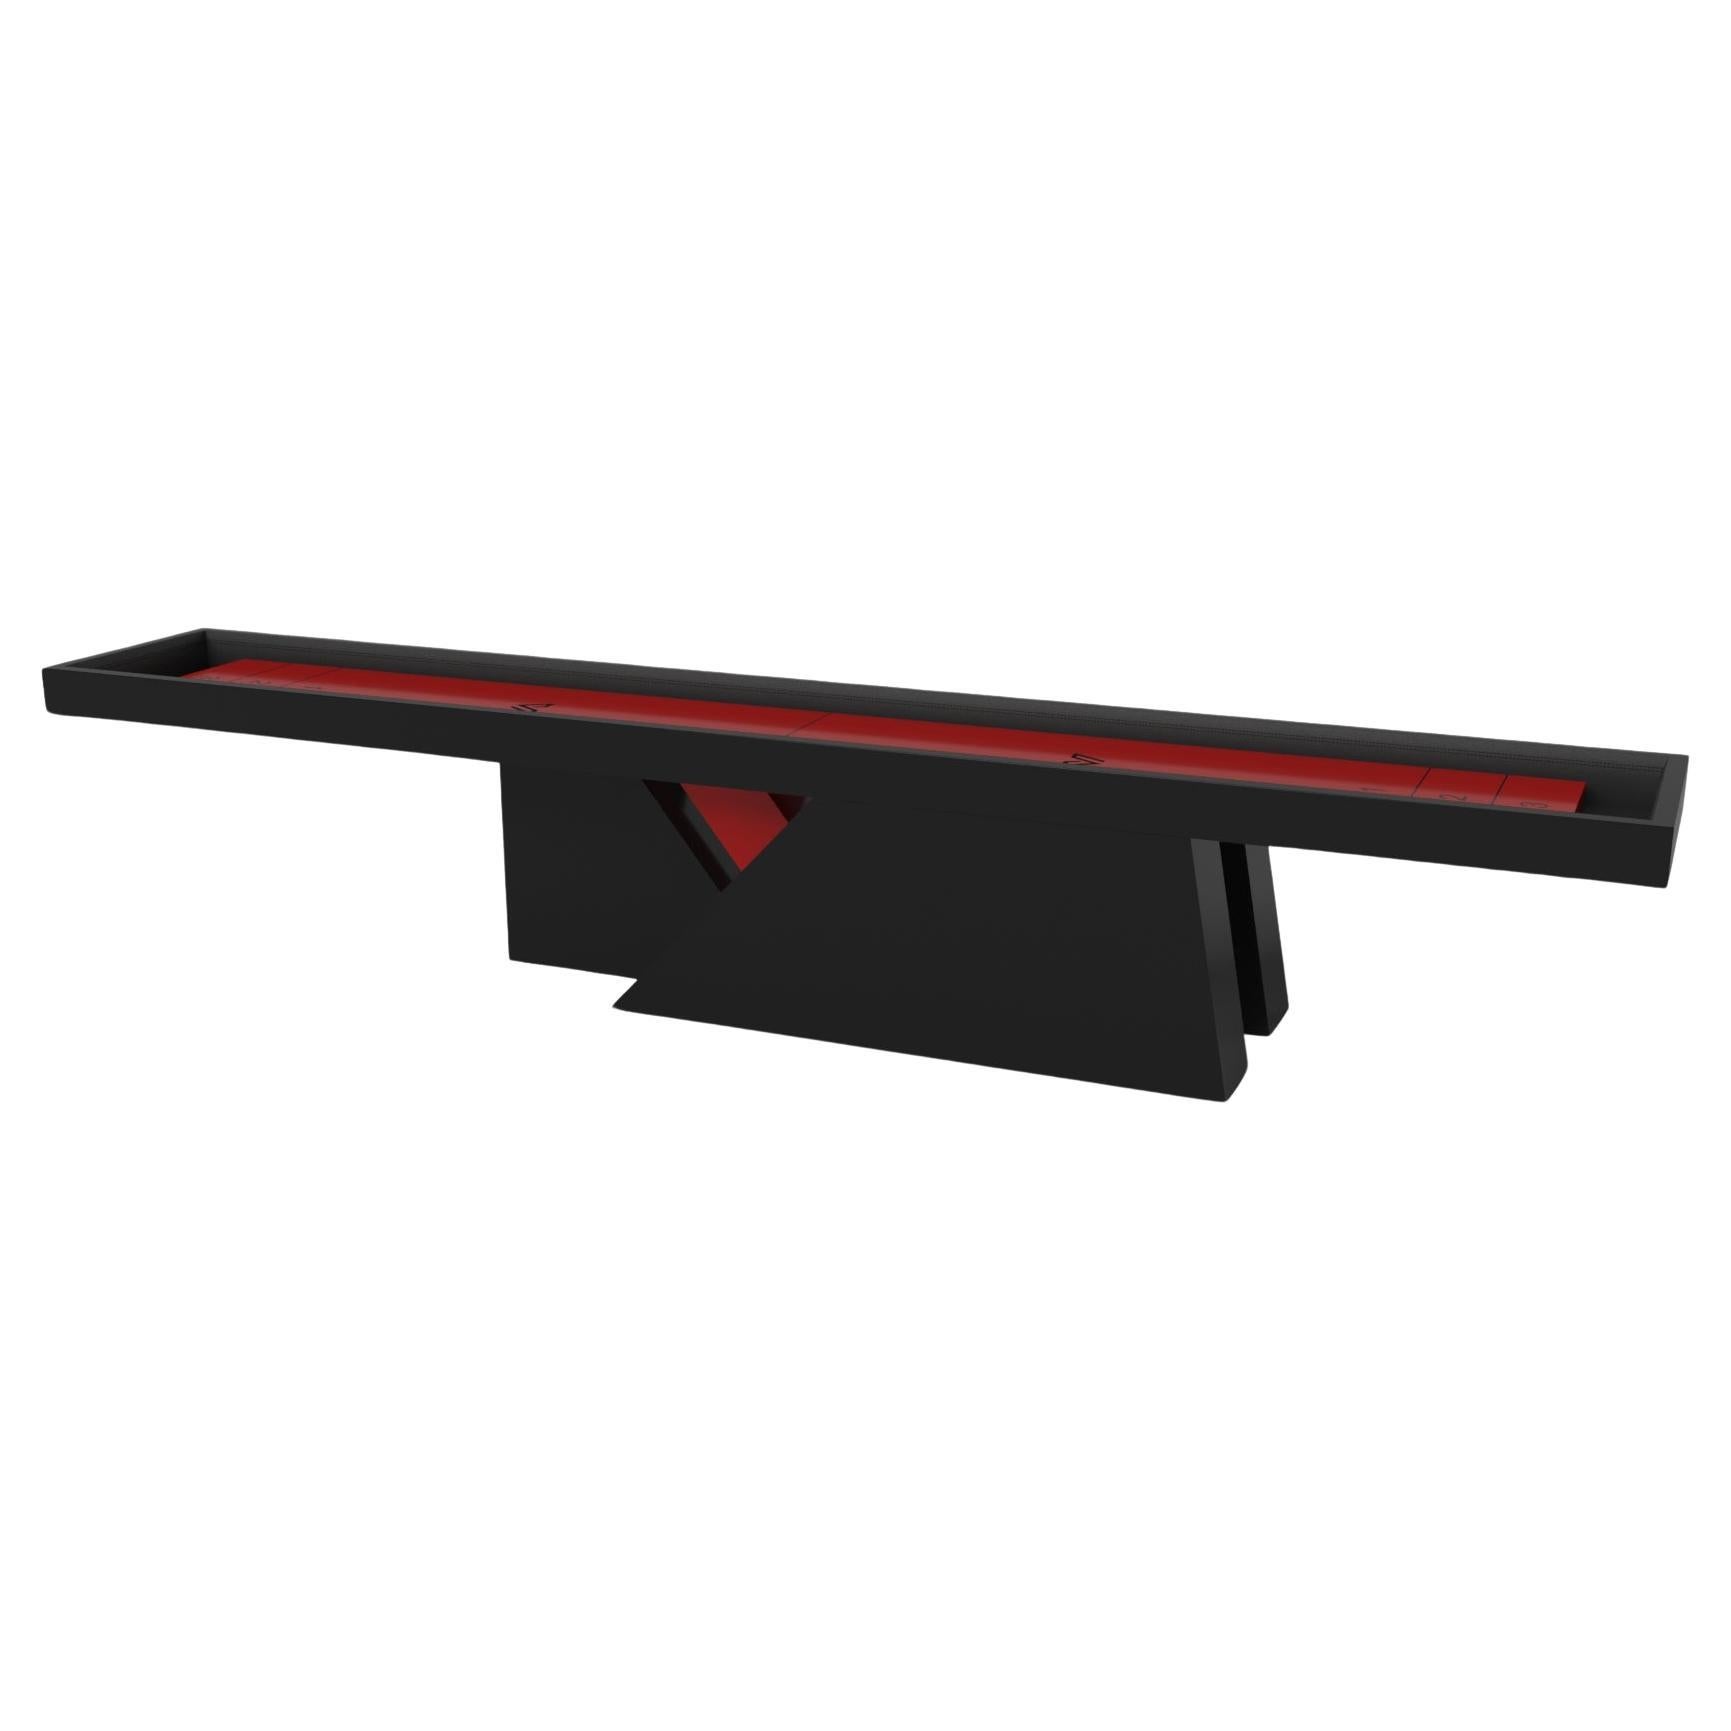 Elevate Customs tables Stilt /Solid Pantone Black Color in 16' -USA